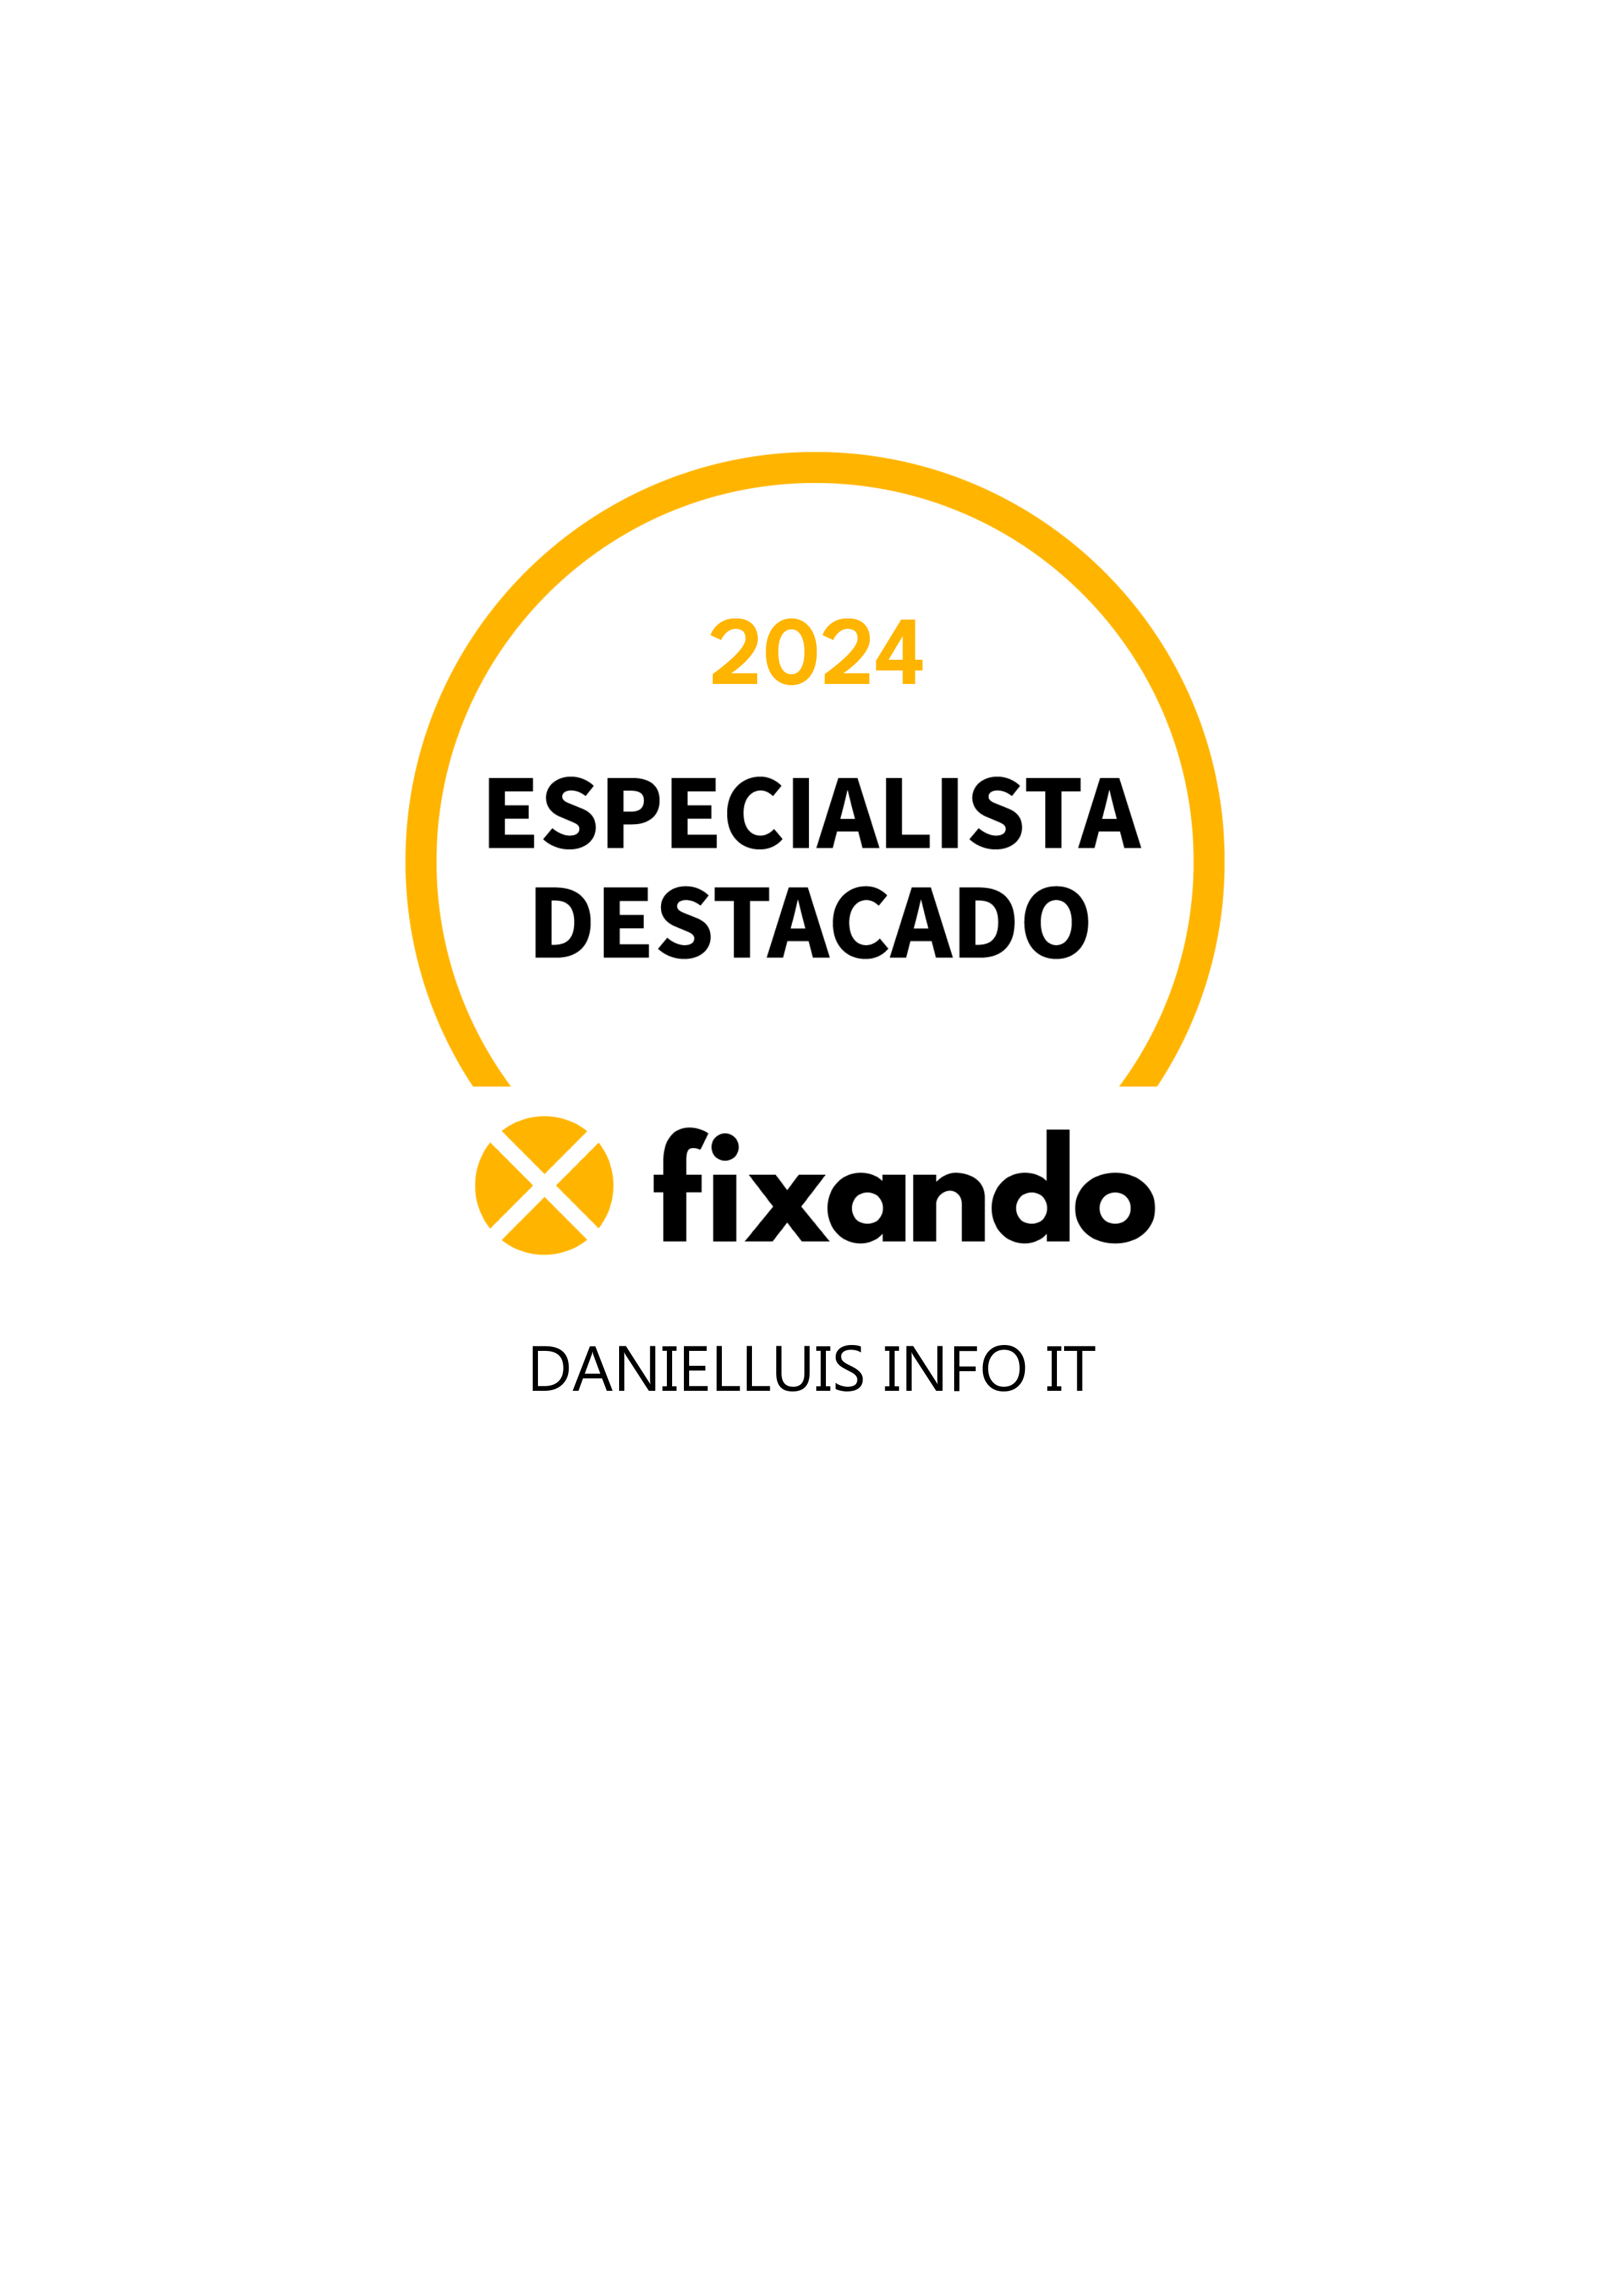 Danielluis info it - Amadora - Reparação de Telemóvel ou Tablet